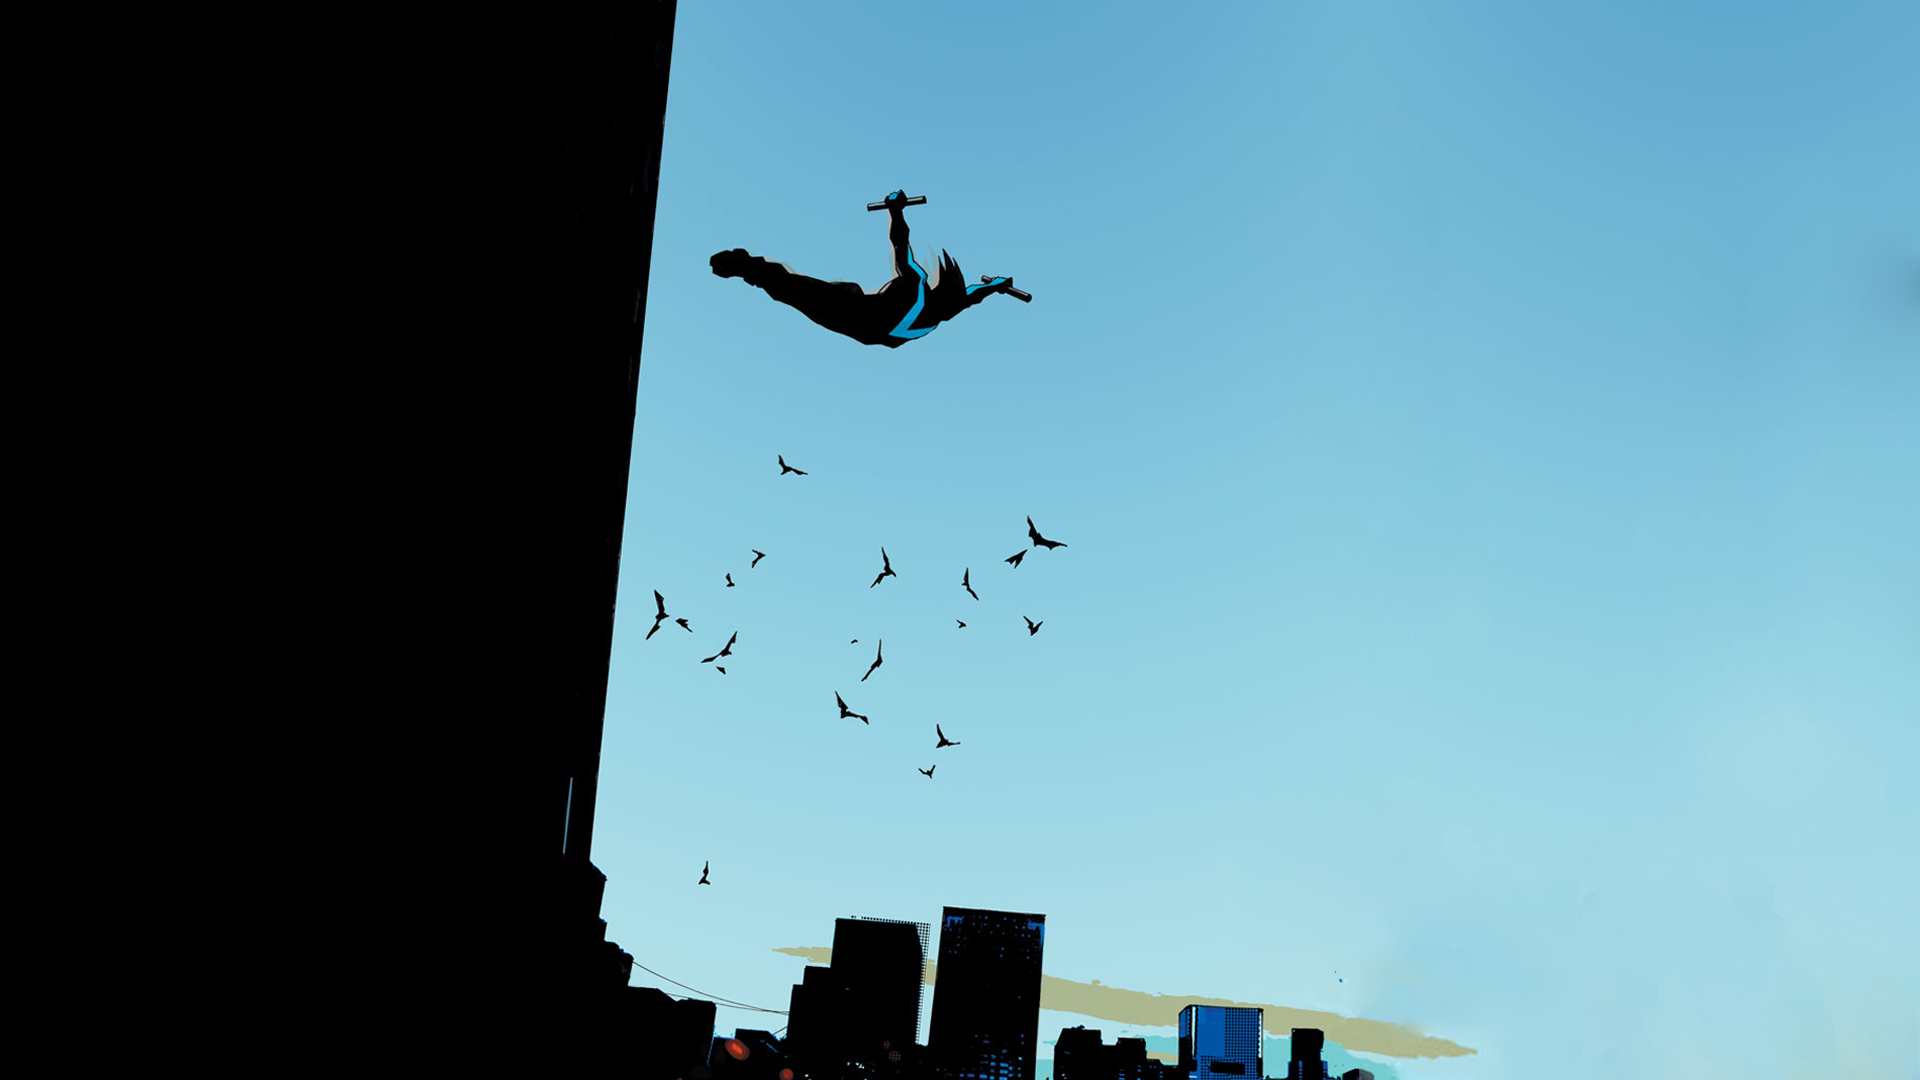 Nightwing Puter Wallpaper Desktop Background